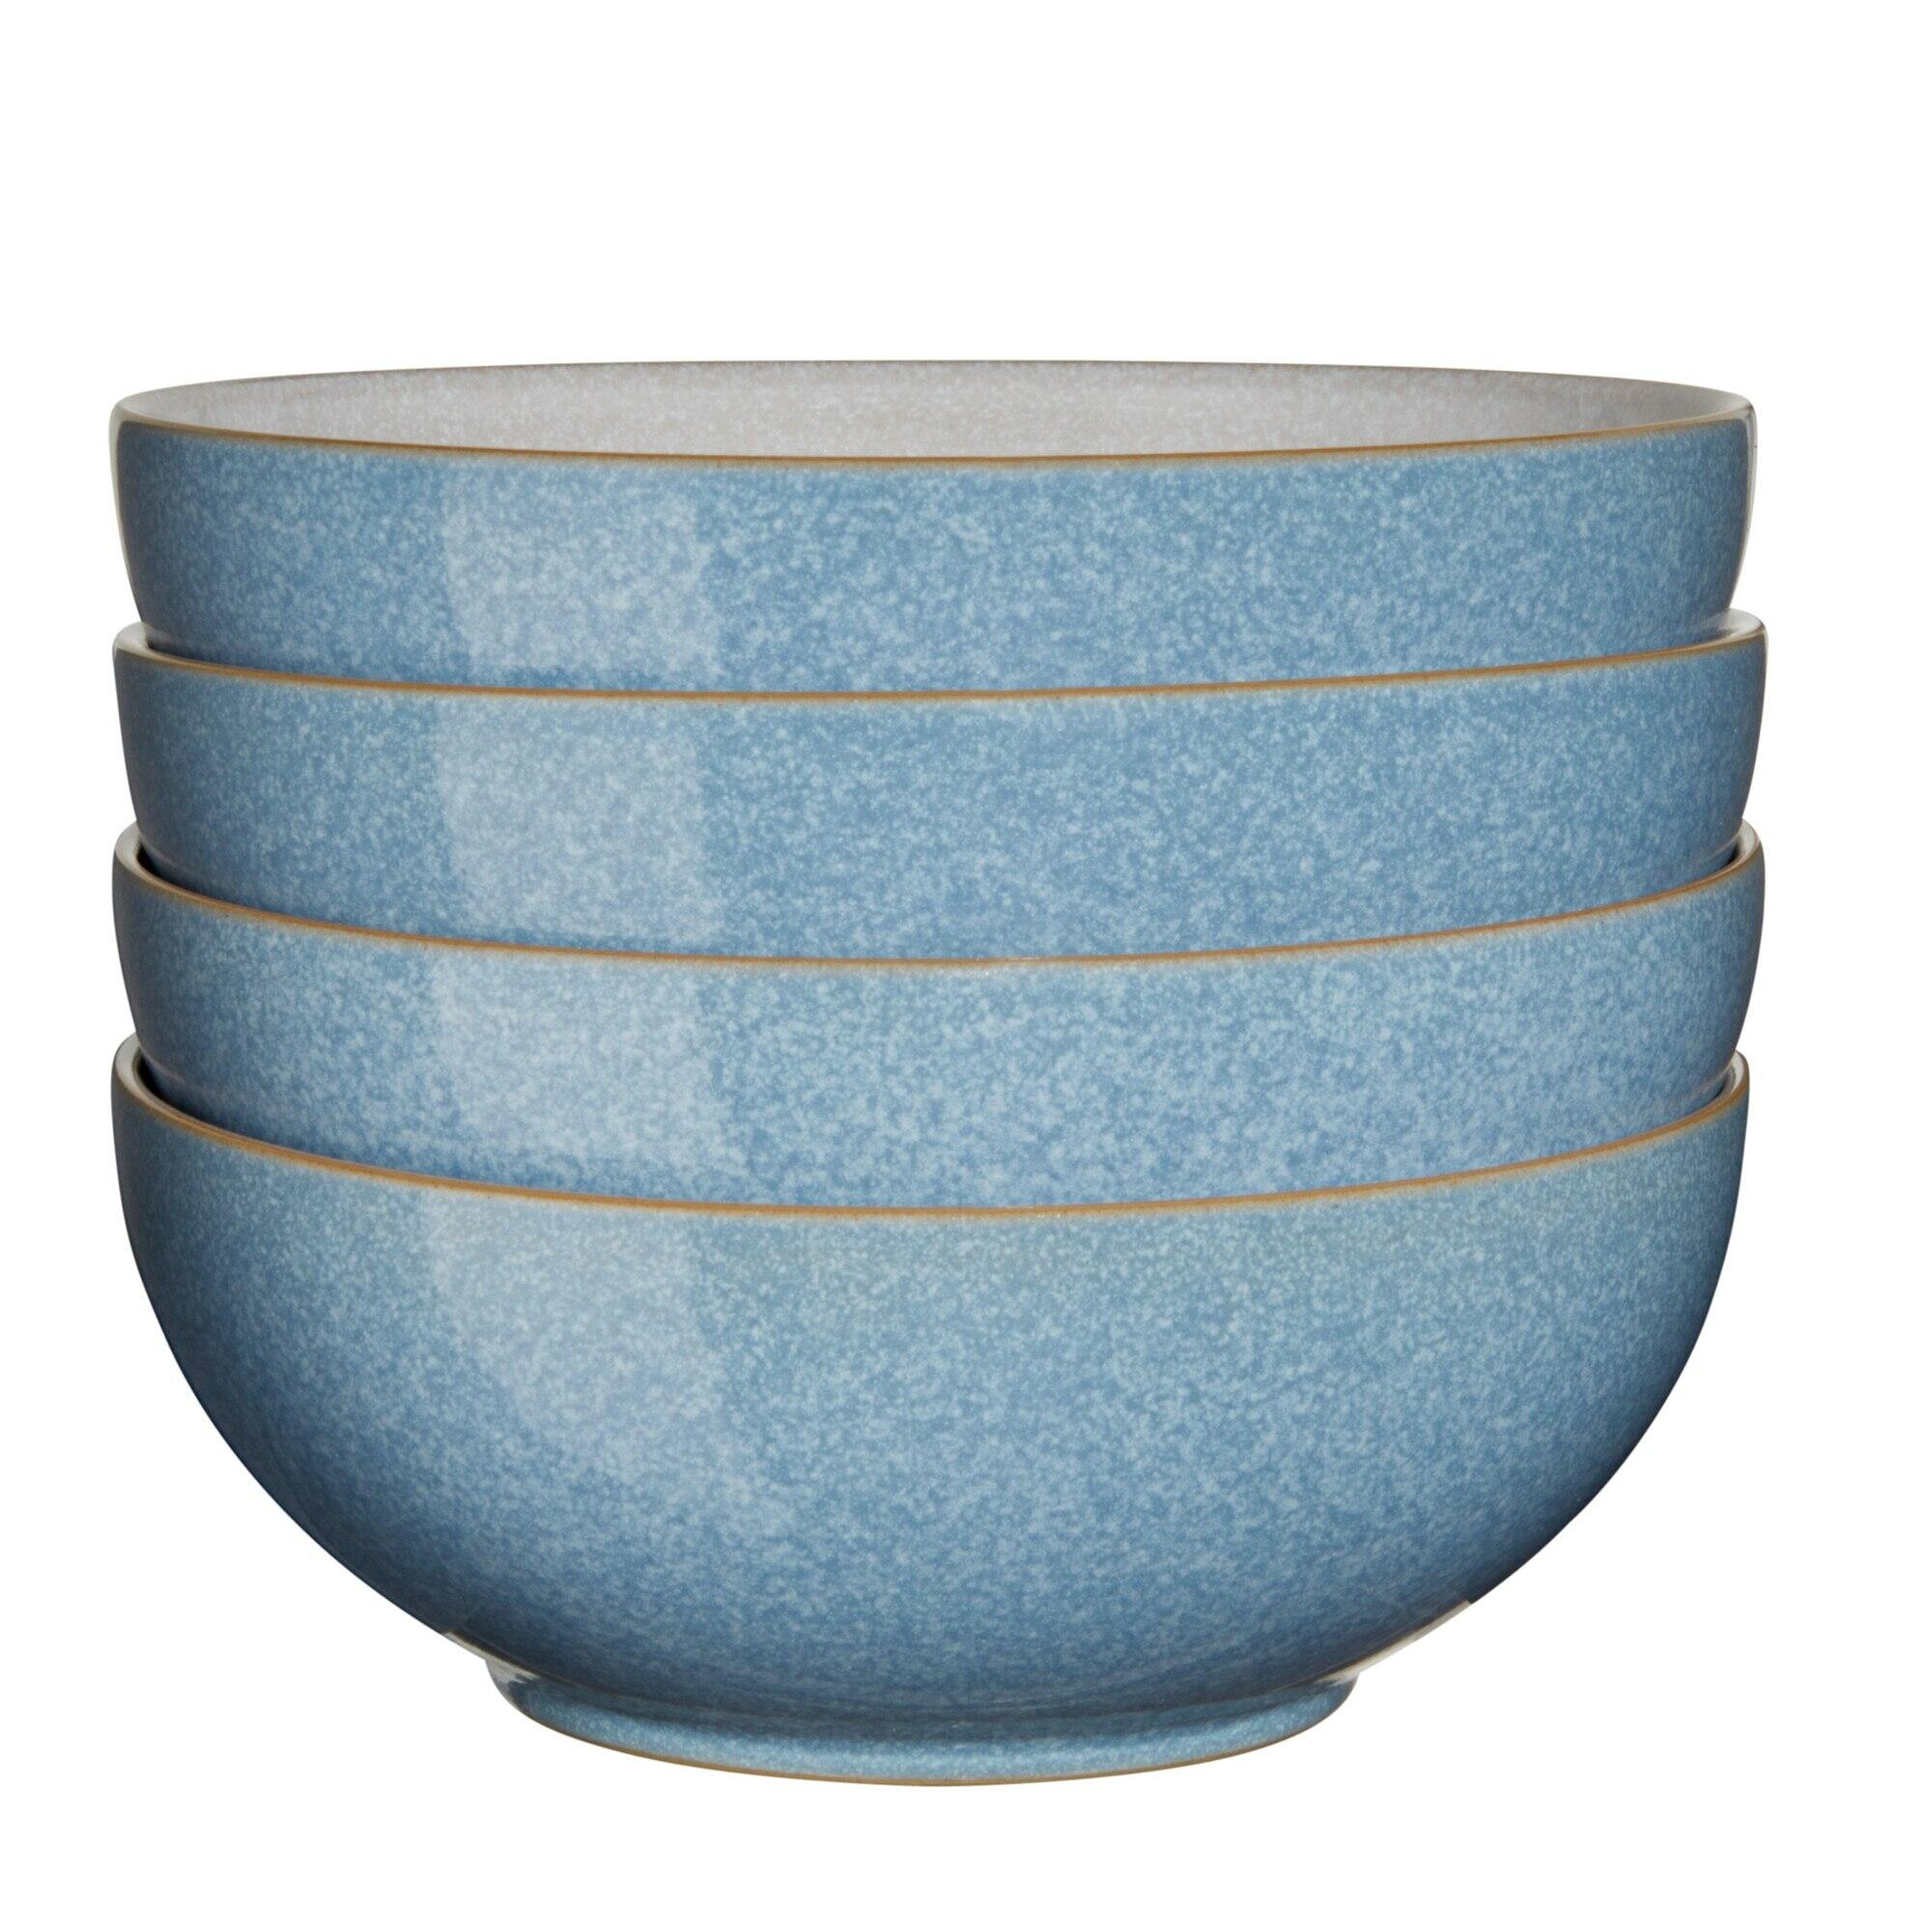 Elements Blue 4 Piece Cereal Bowl Set